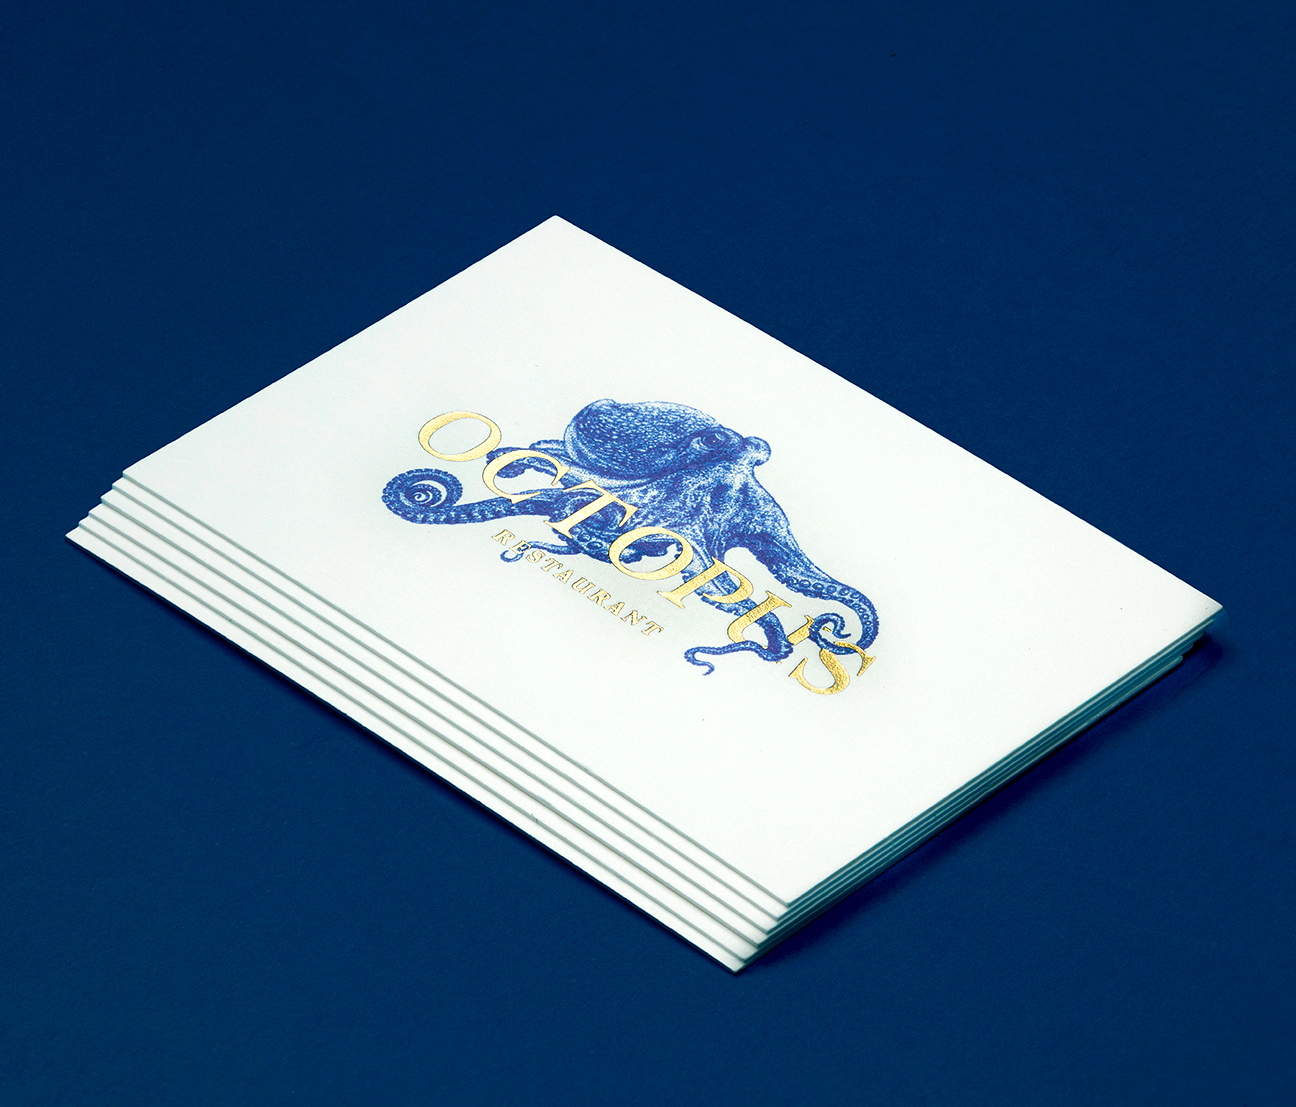 Fabien-cuffel-Typographiste-graphiste-geveve-Swissgraphicdesign_Restaurant_Octopus_logo